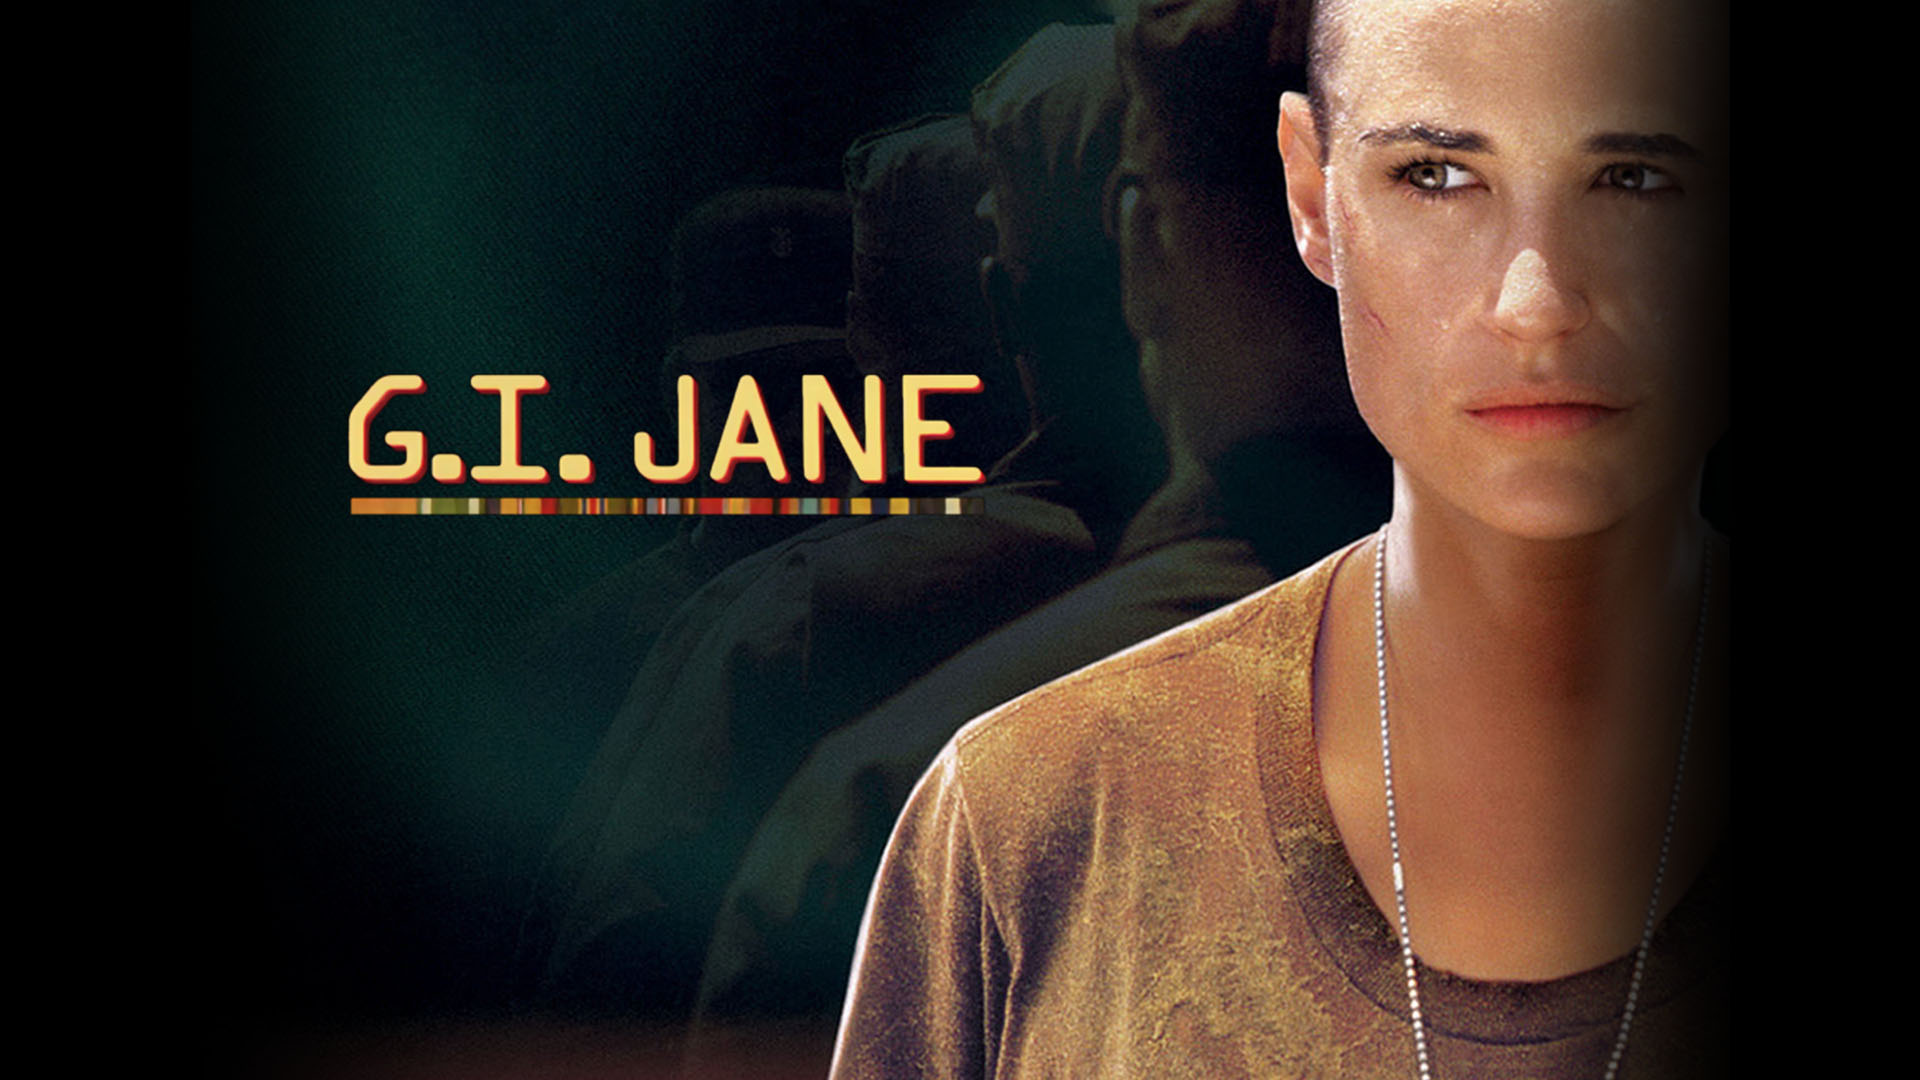 Watch G.I. Jane Online | Stream Full Movies